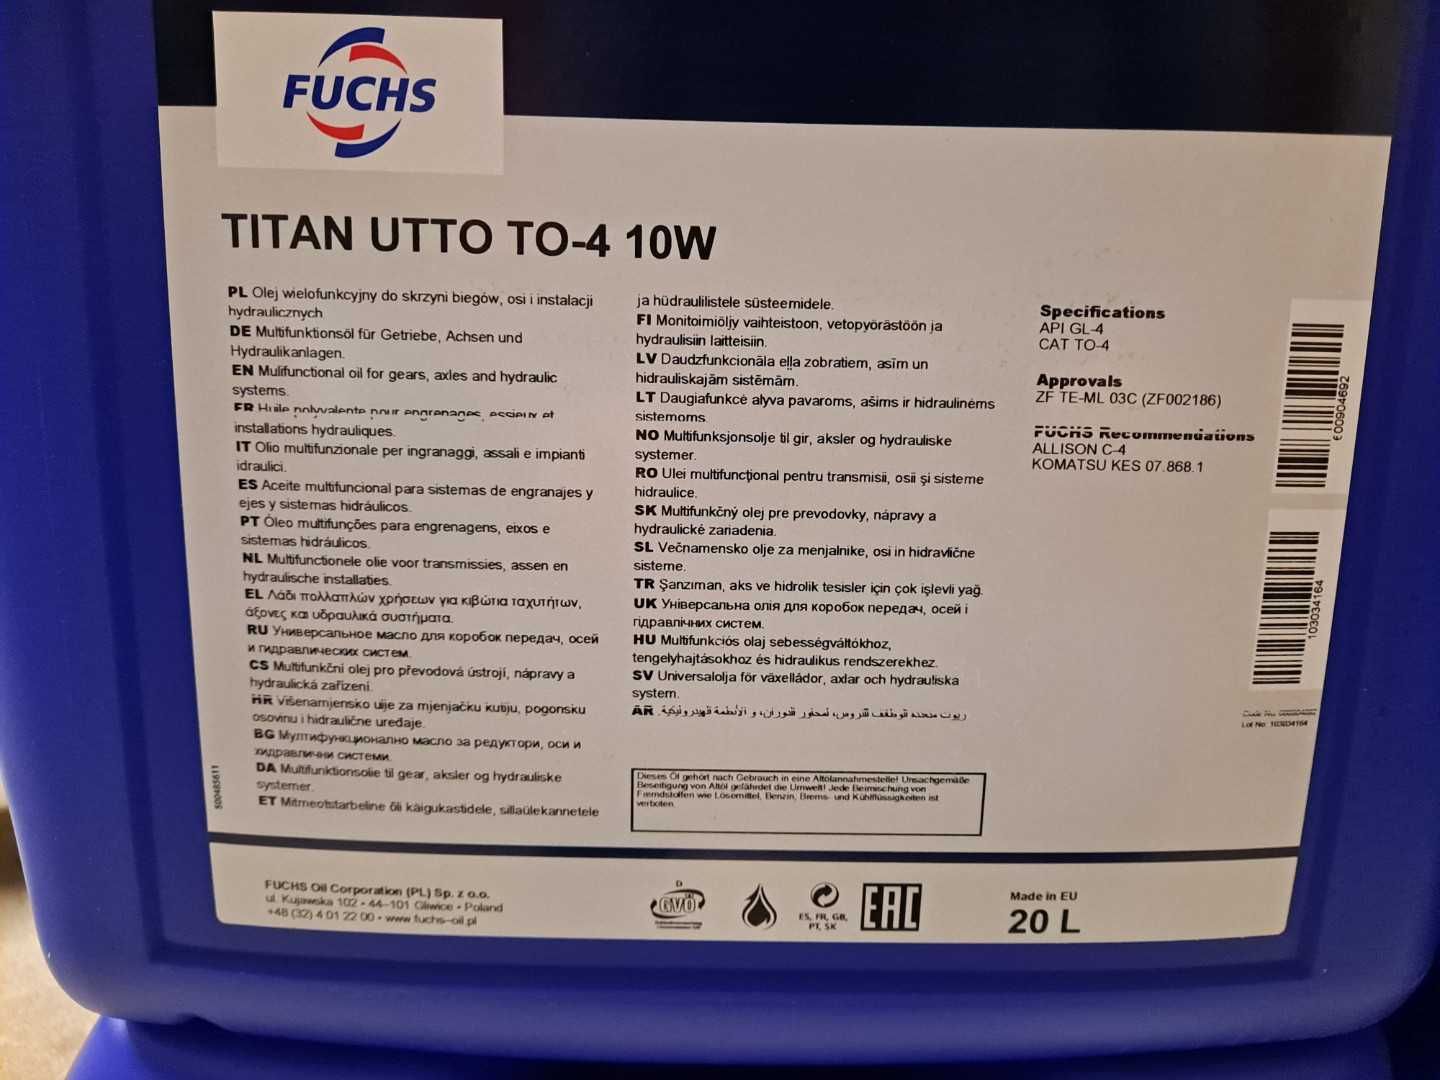 olej fuchs titan utto TO-4 10w 20L. + FILTR